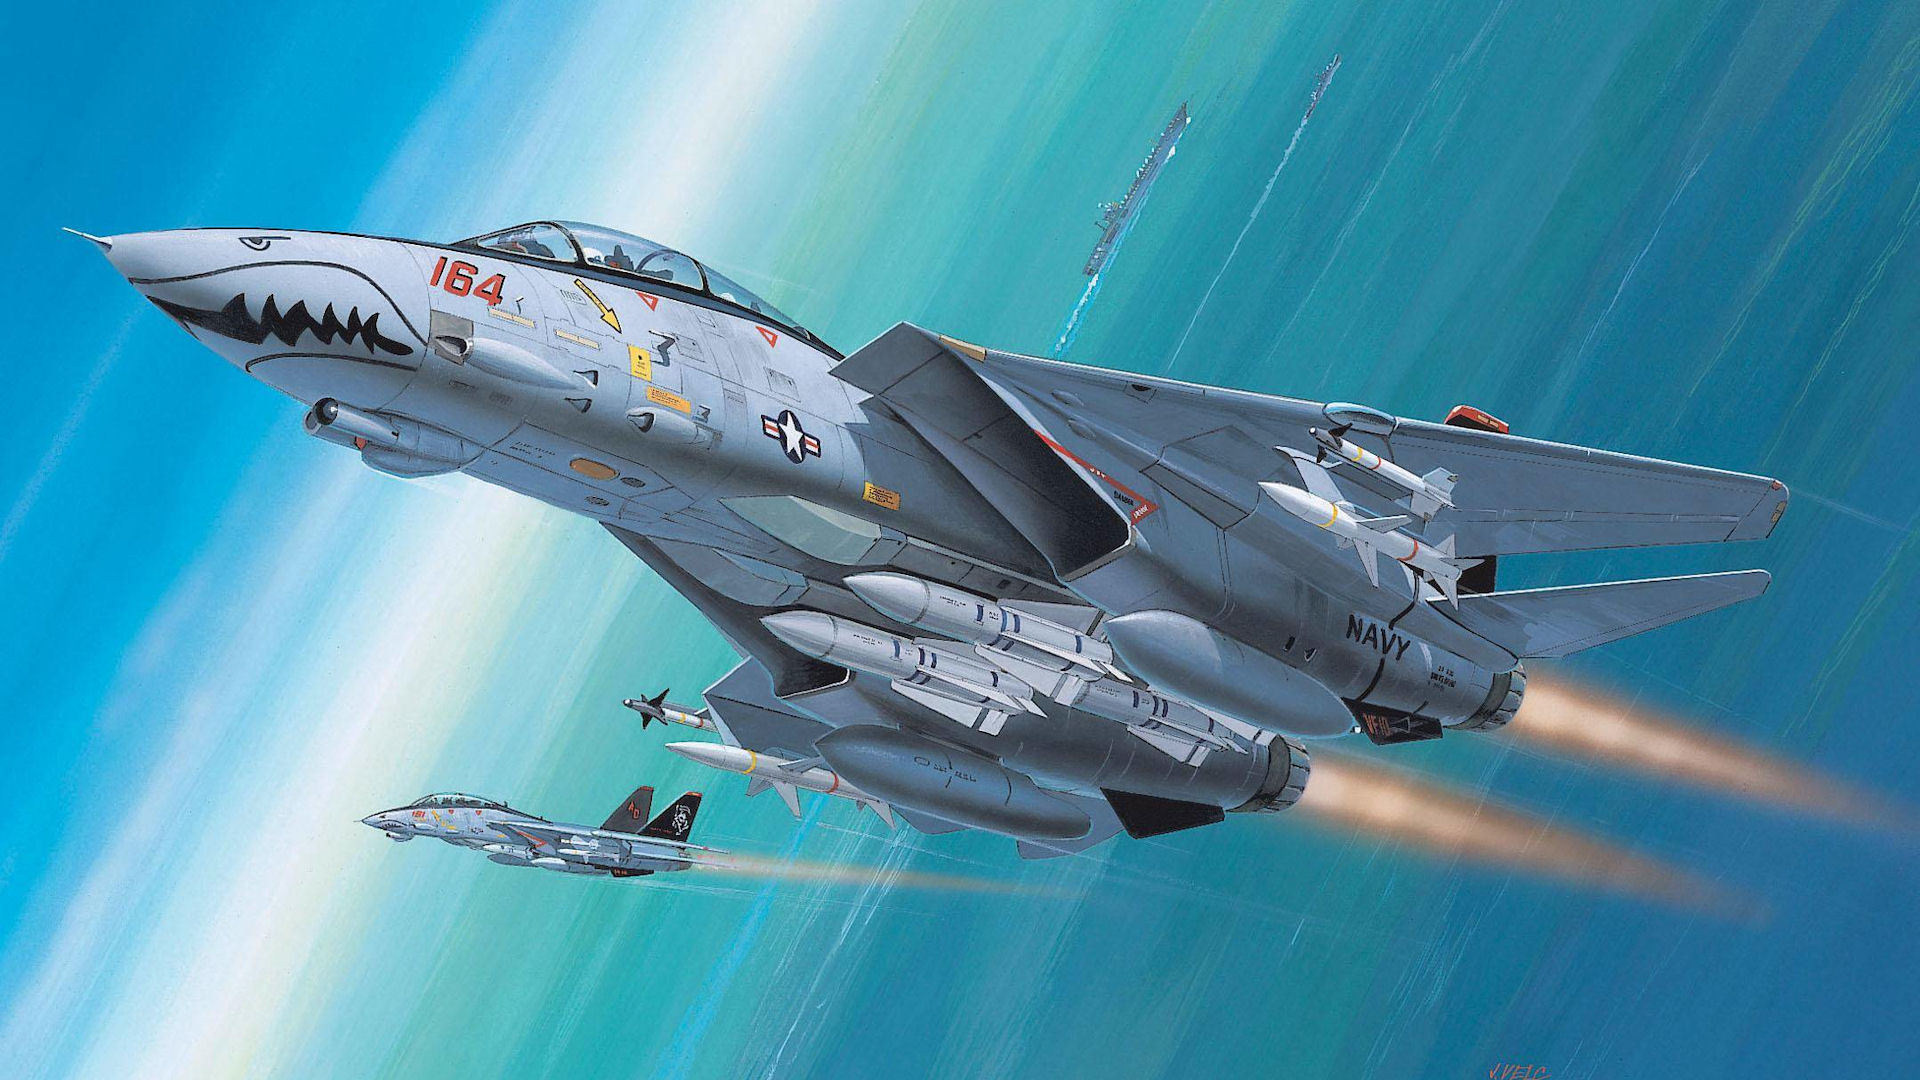 grumman, F 14, Tomcat, Fighter, Interceptor, Navy, Avianisets, Missiles, Risunoik, Military, Jet, Jets Wallpaper